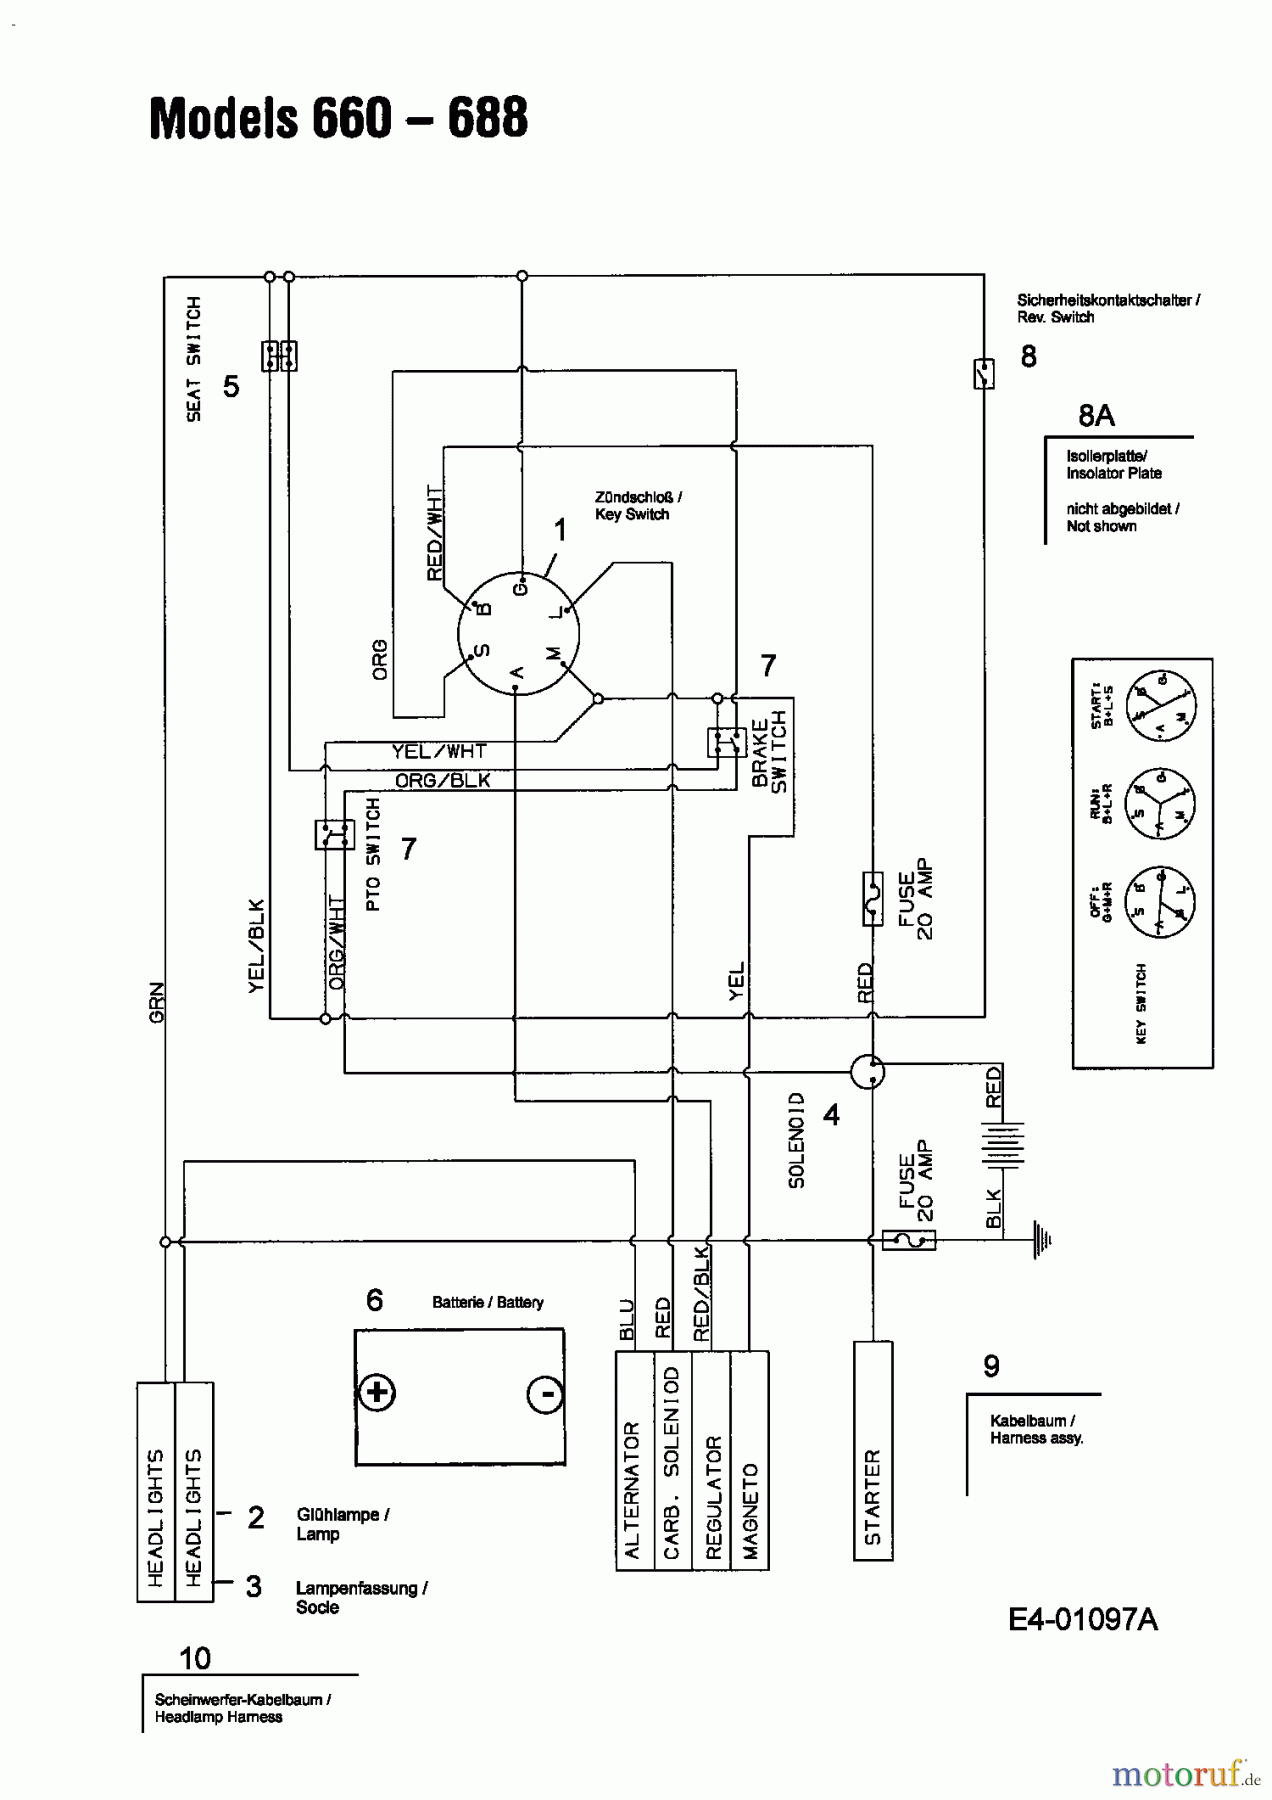  MTD untill 2011 Lawn tractors RS 115/96 13A1662F600  (2004) Wiring diagram